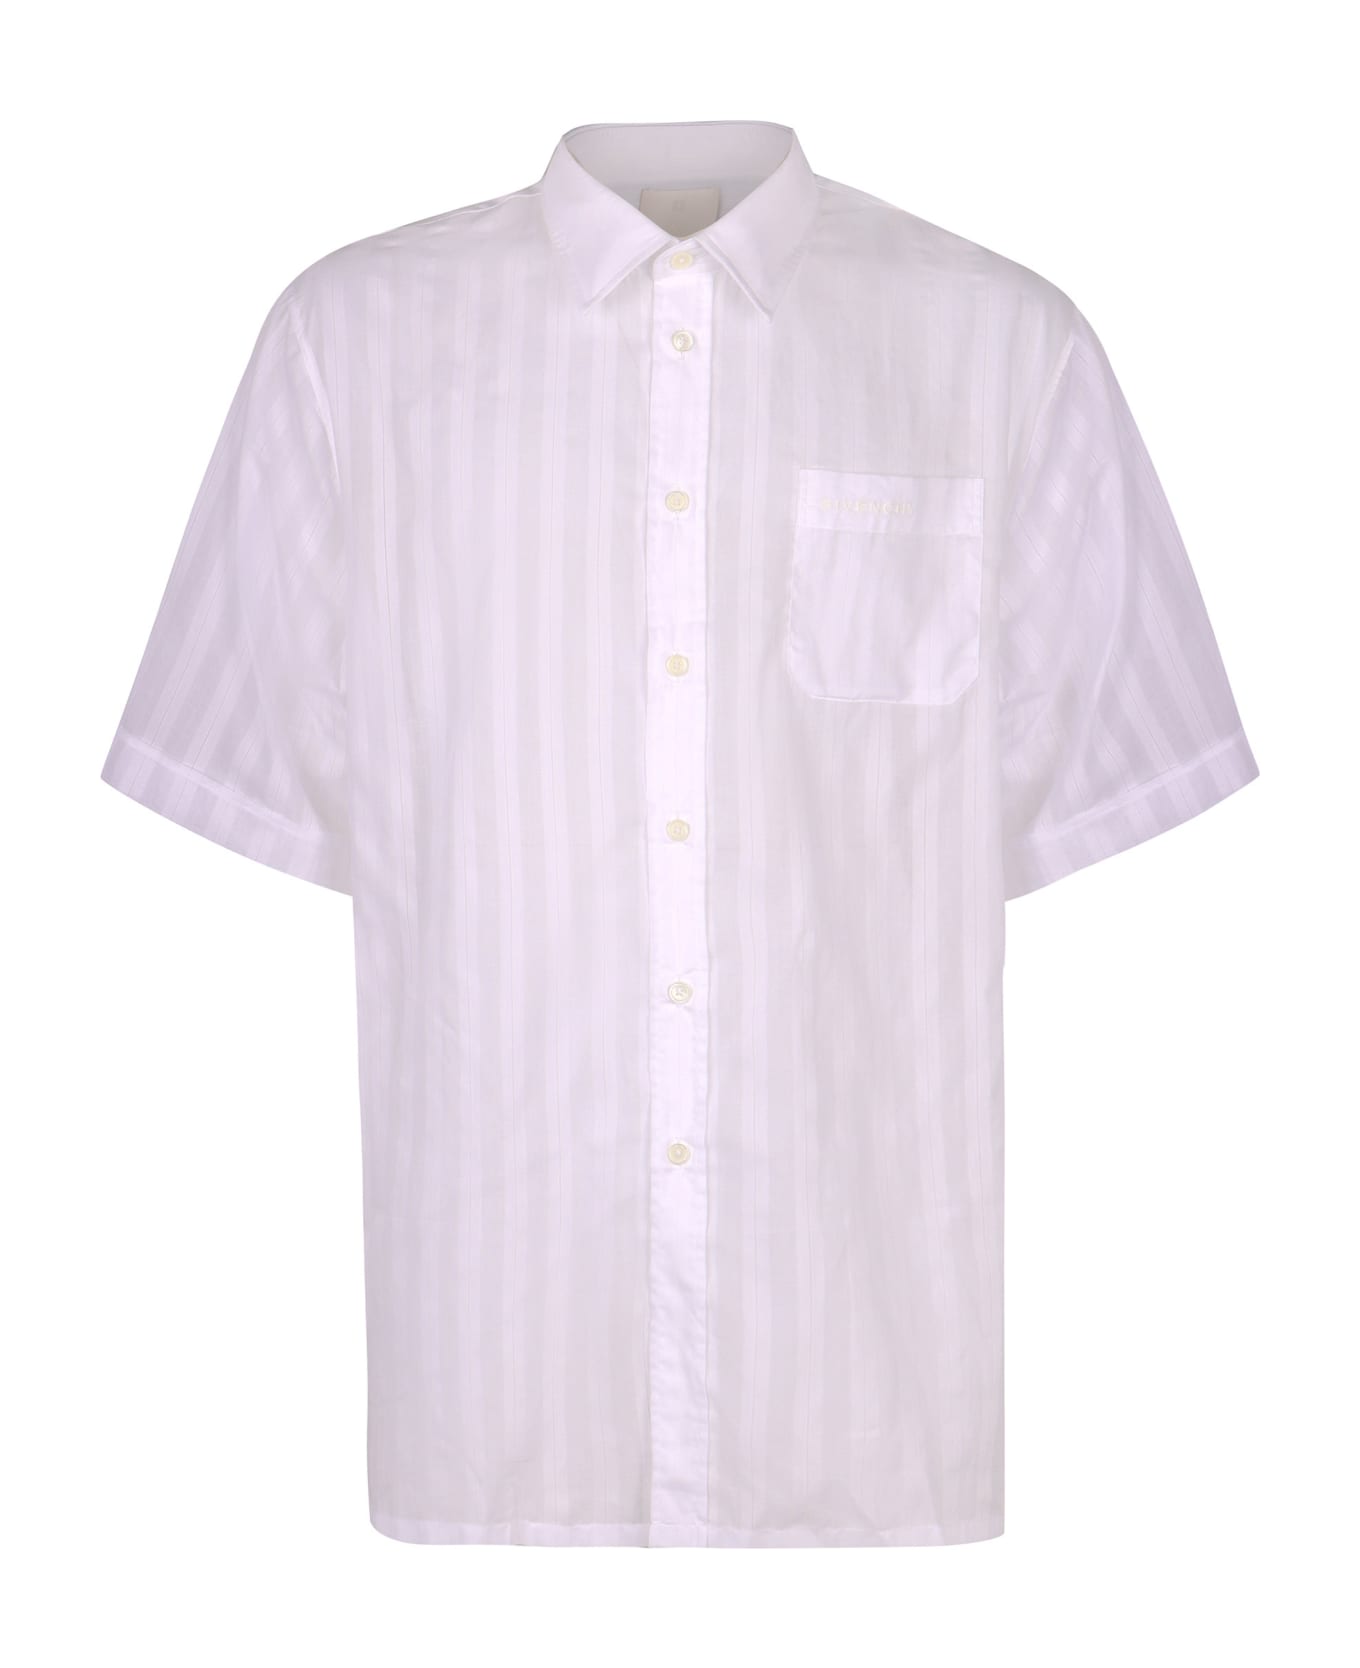 Givenchy Short Sleeve Cotton Shirt - White